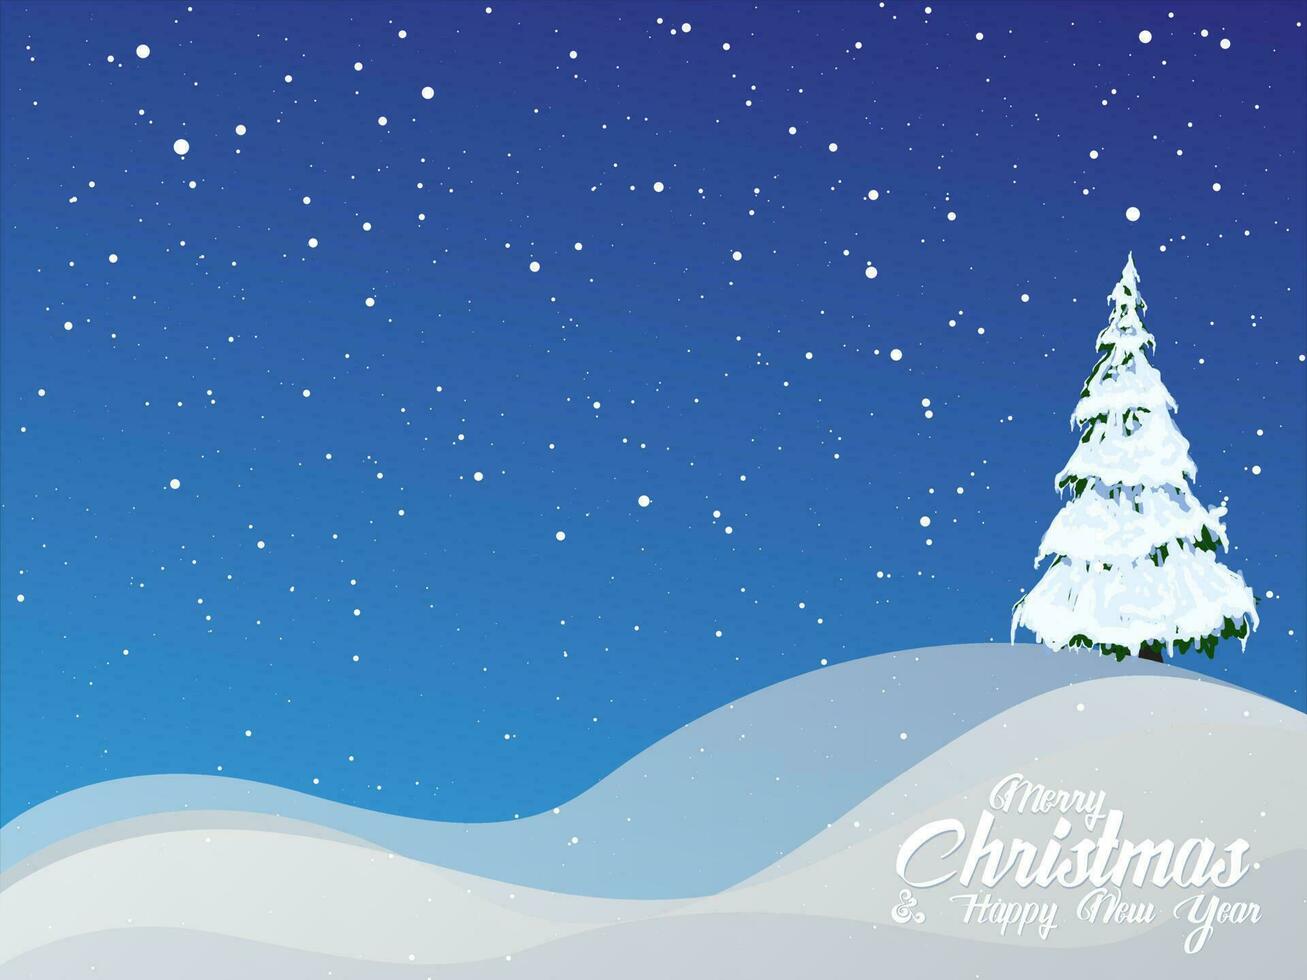 Simply Christmas Winter Snow Post Card vector